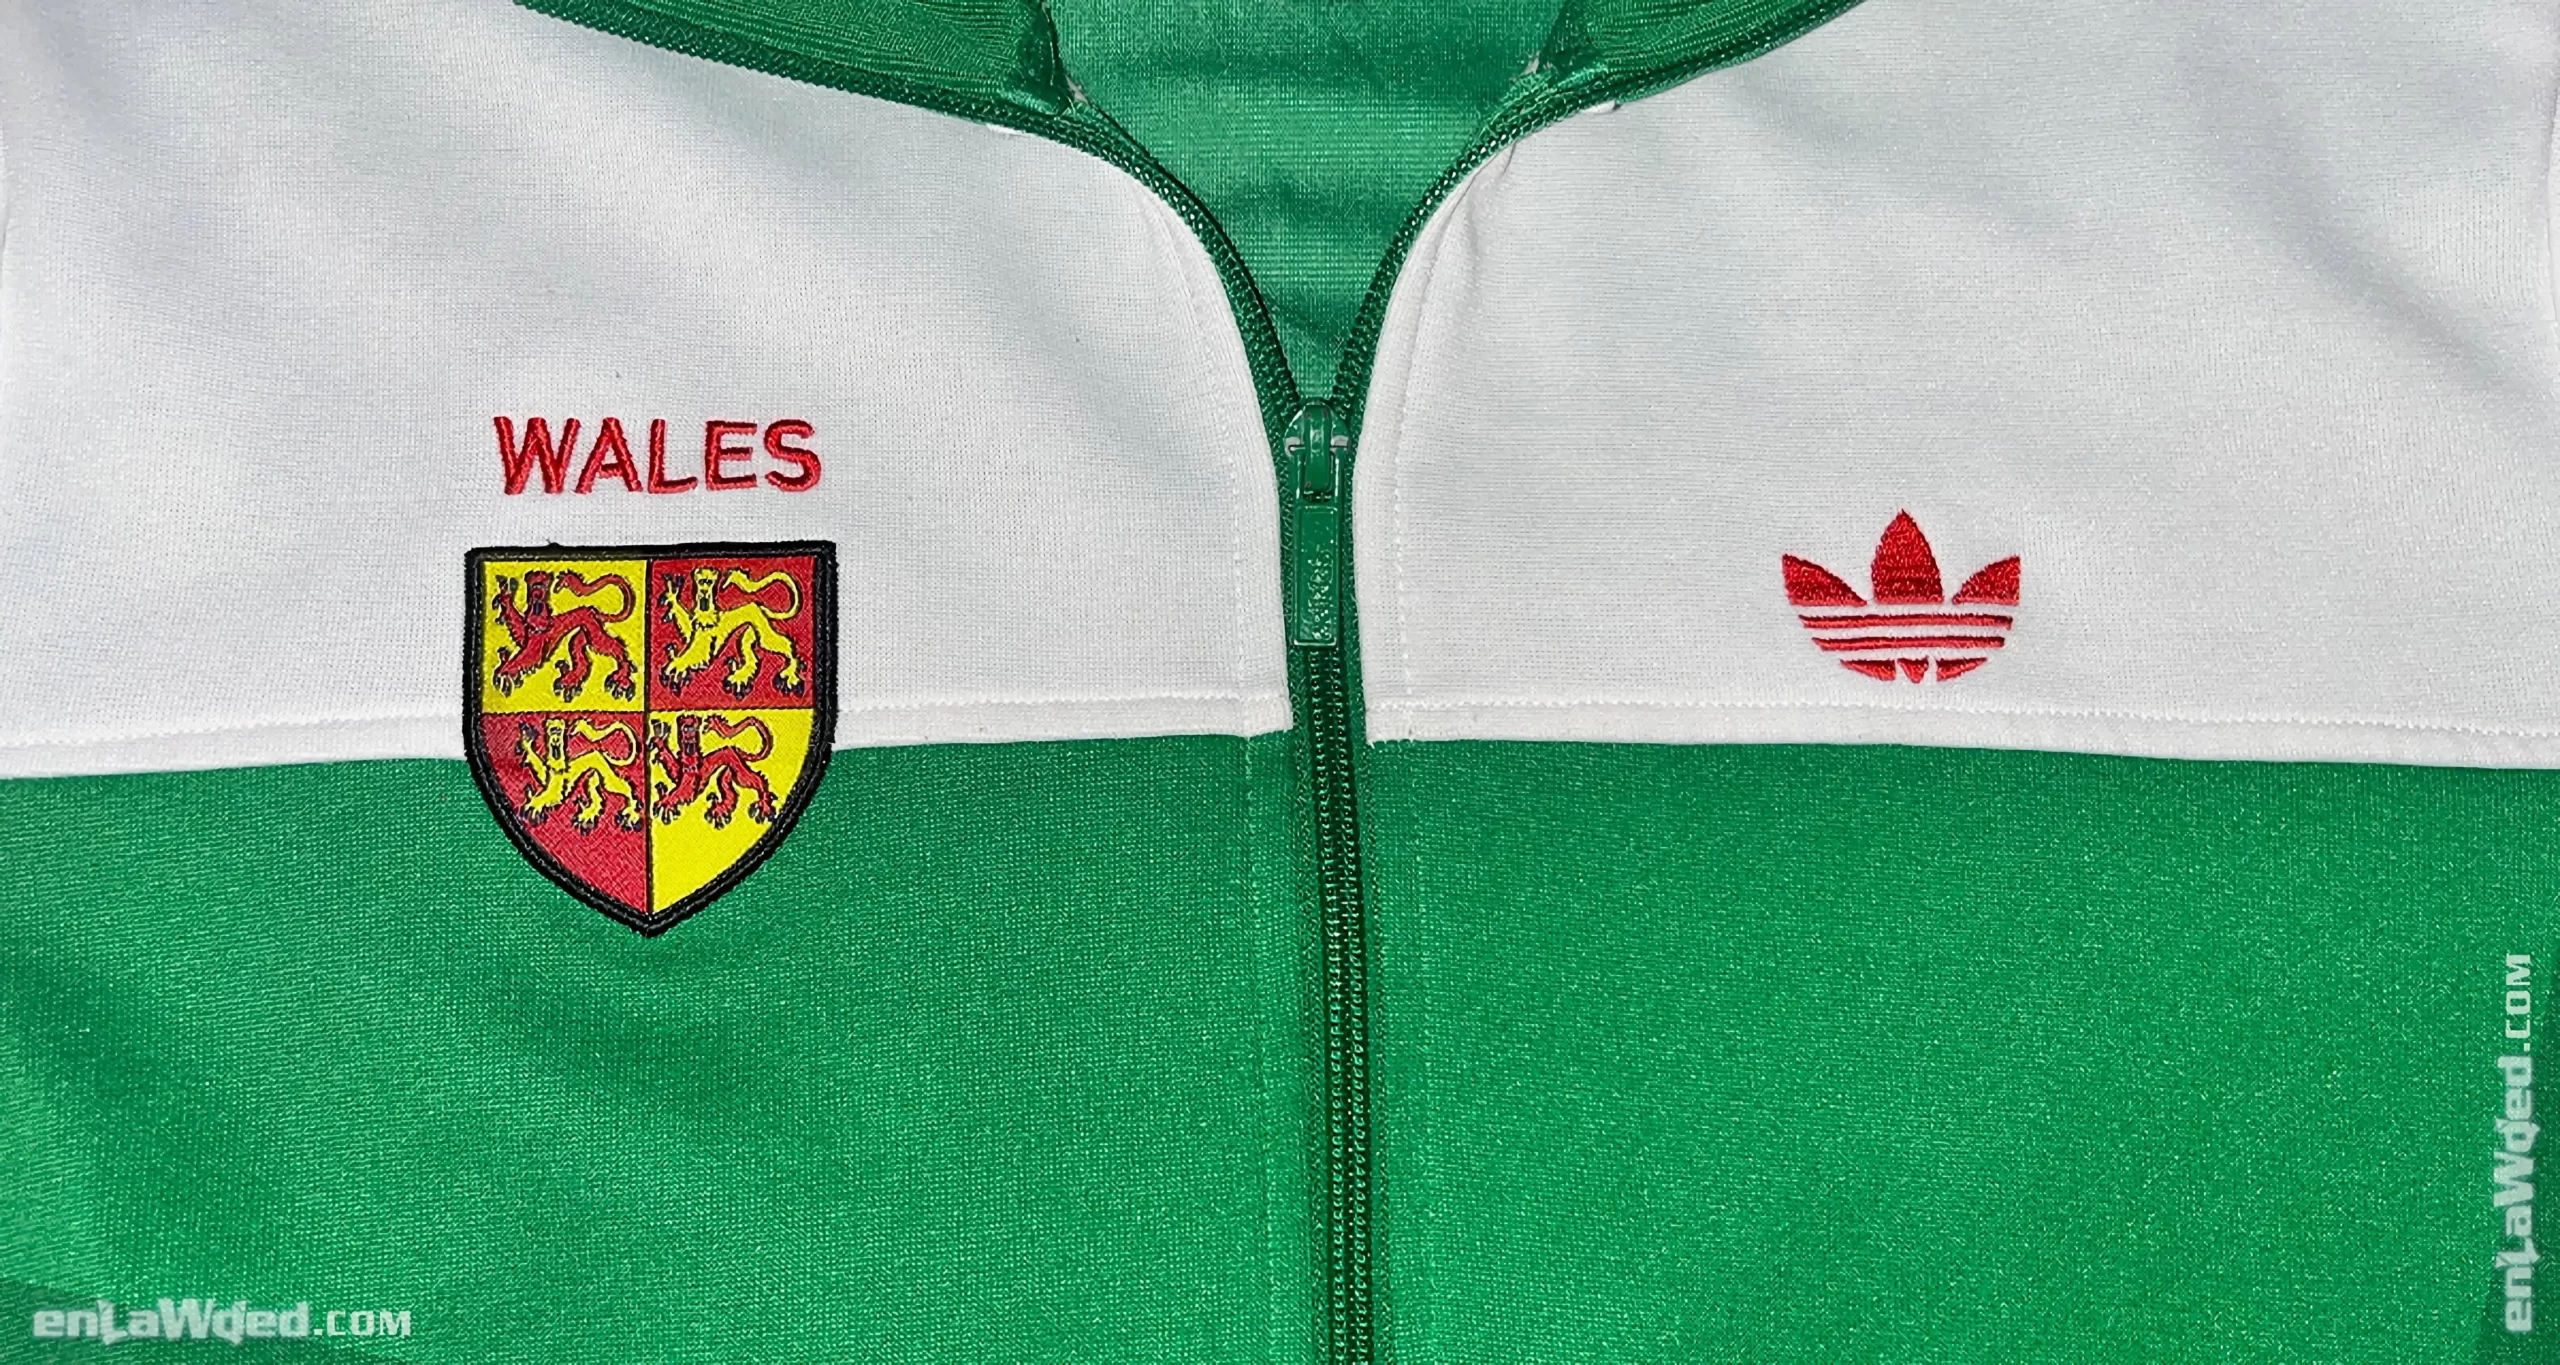 Men’s 2008 Wales TT by Adidas Originals: Heartwarming (EnLawded.com file #lp1mzn1u1262541tf9edm9jcz)